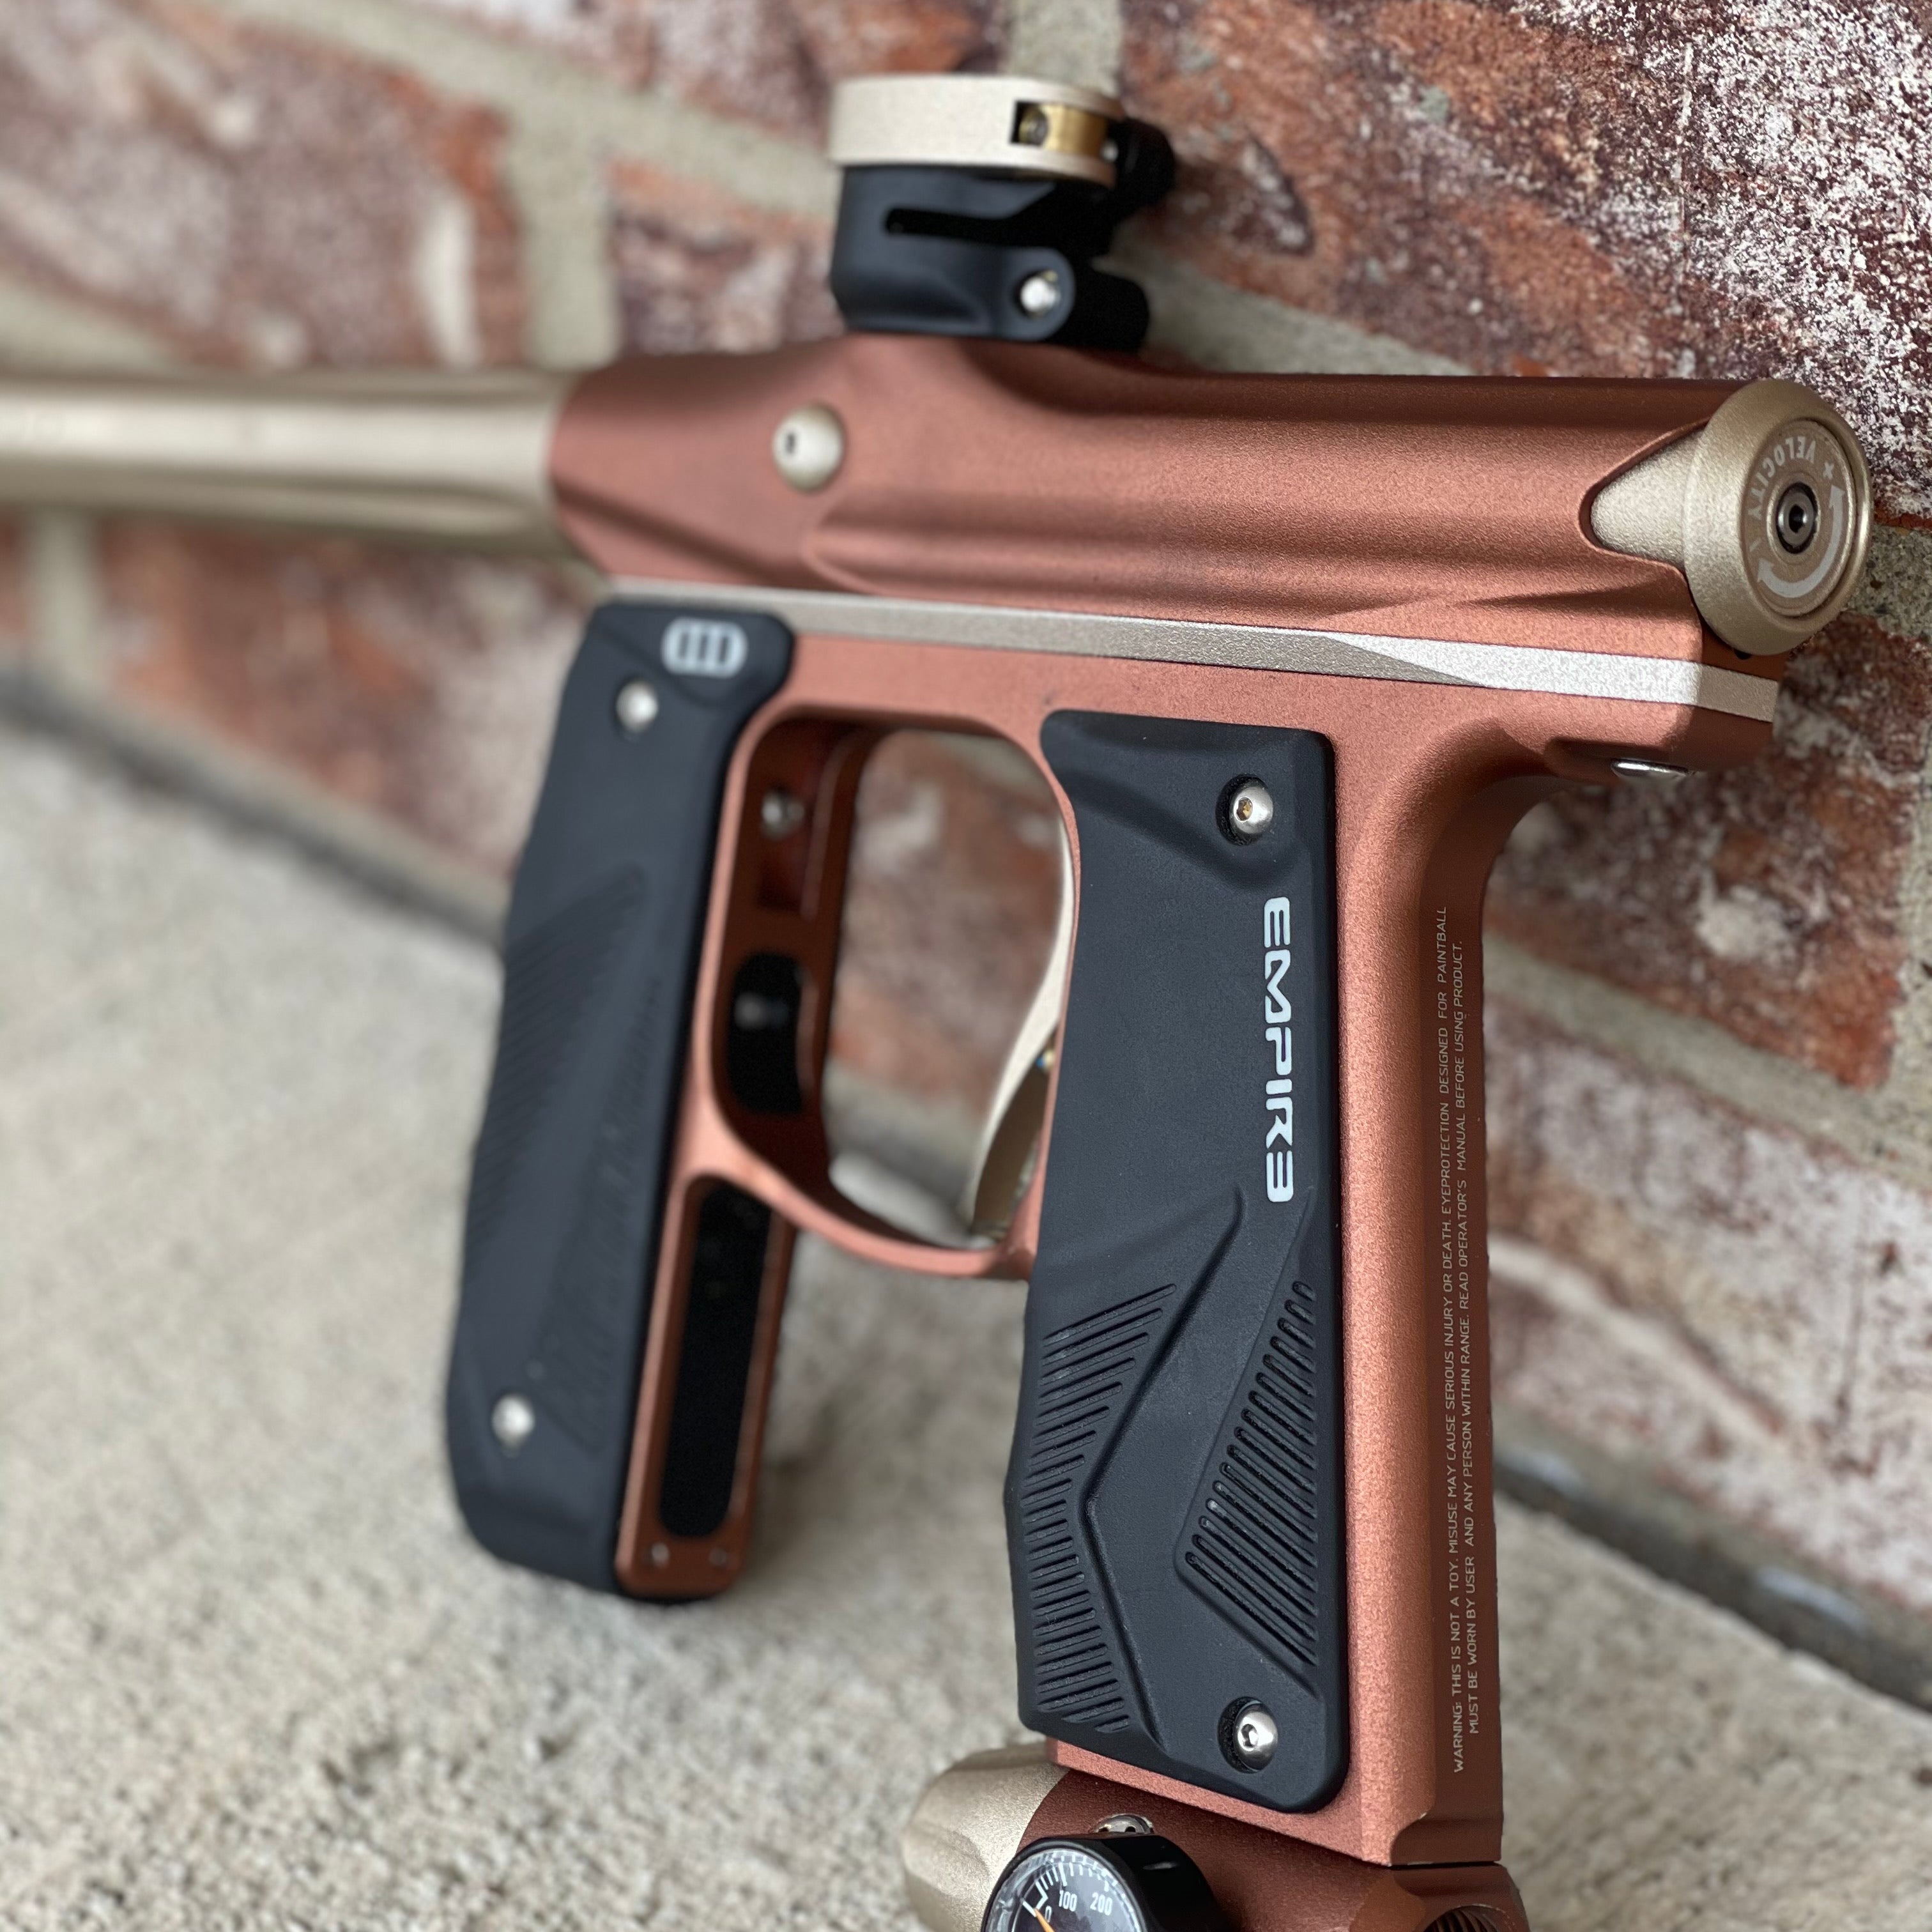 Used Empire Mini GS Paintball Gun - Brown / Tan